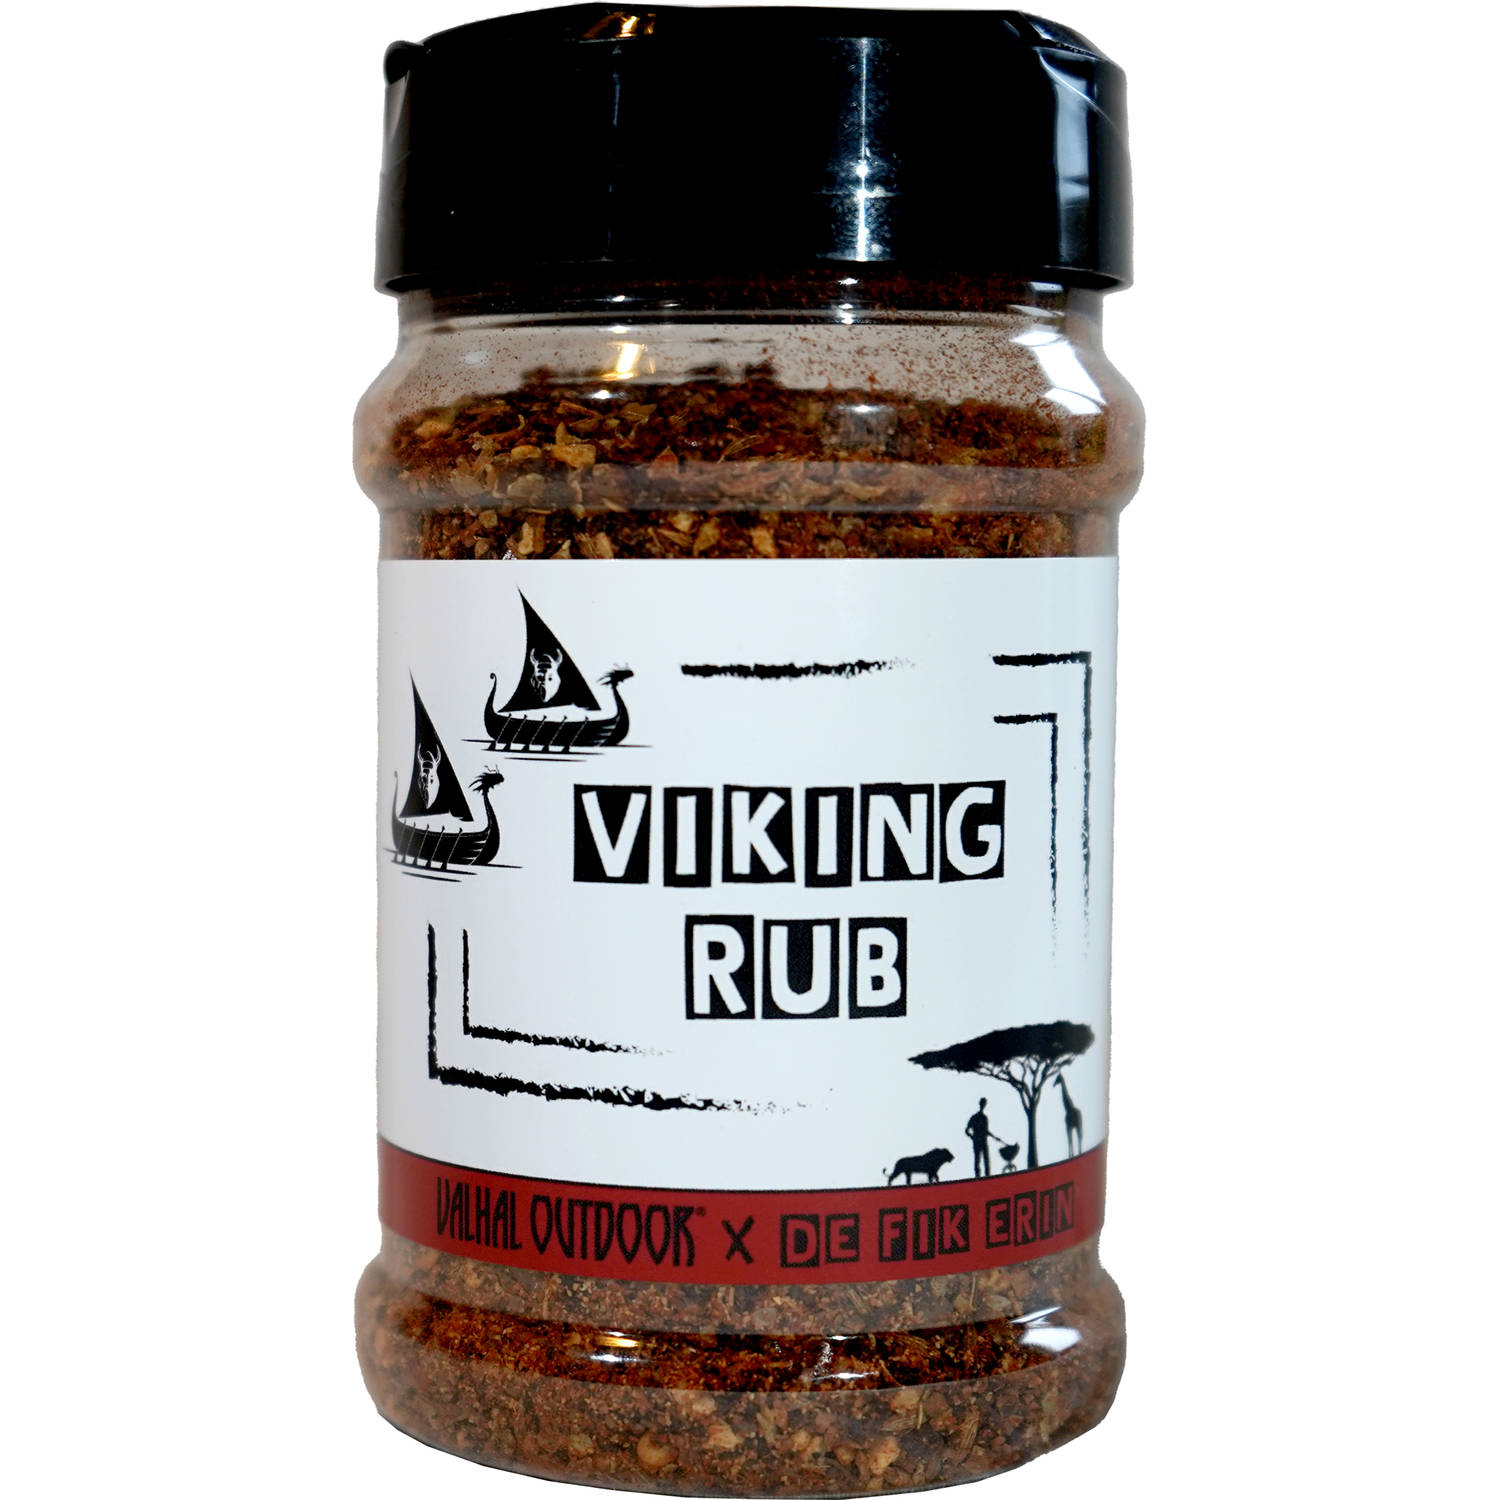 Valhal Outdoor x DE FIK ERIN - Viking Rub - All purpose dry rub